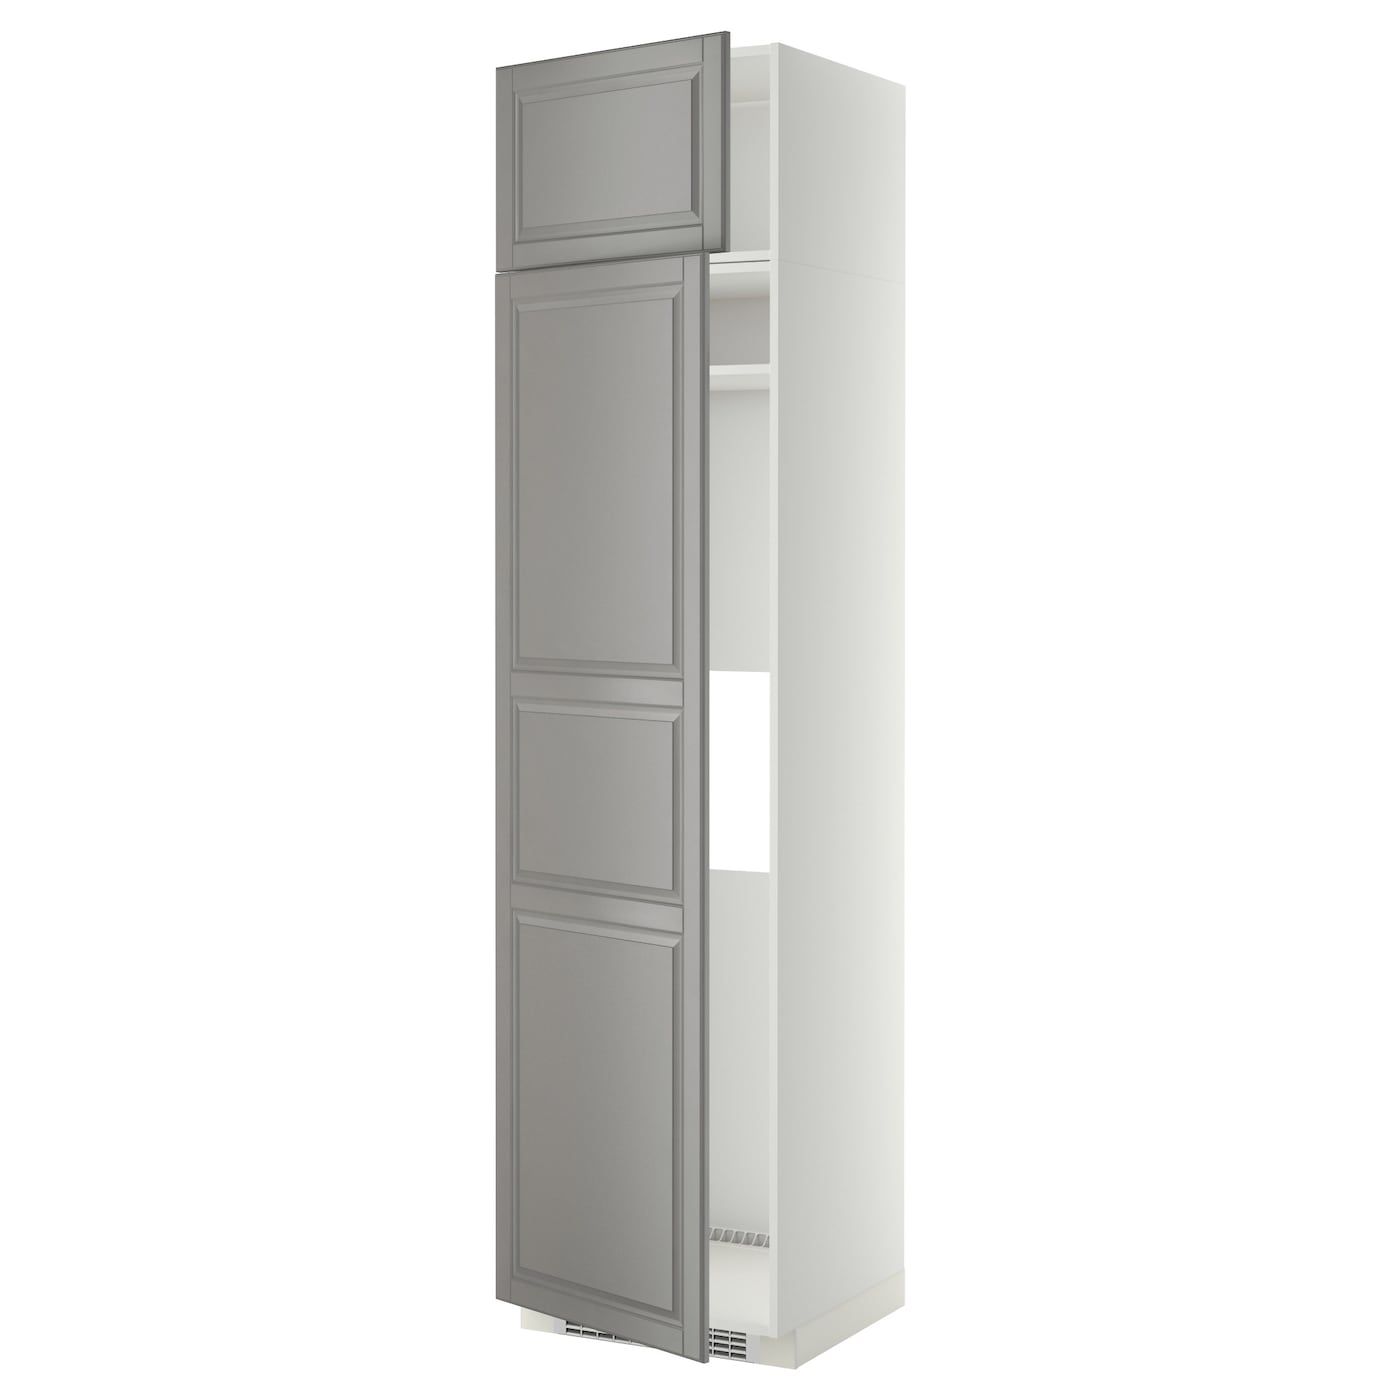 Высокий кухонный шкаф - IKEA METOD/МЕТОД ИКЕА, 240х60х60 см, белый/серый